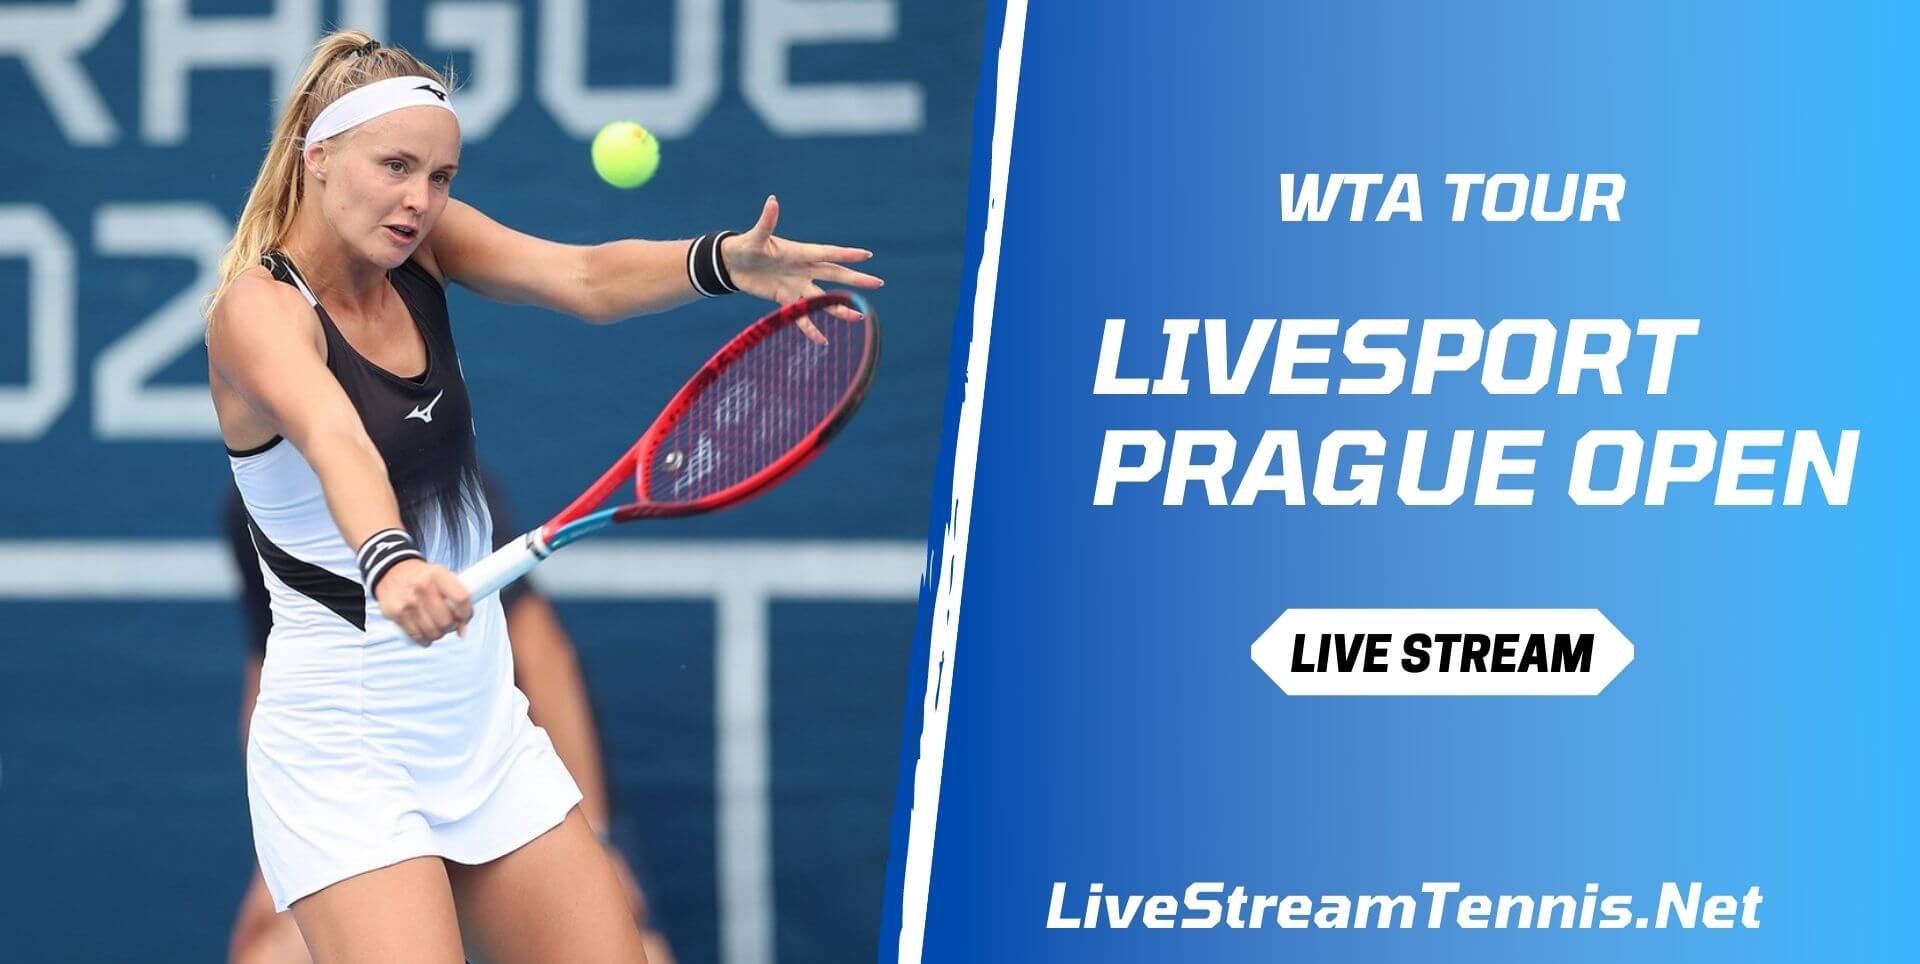 livesport-prague-open-wta-live-stream-tennis